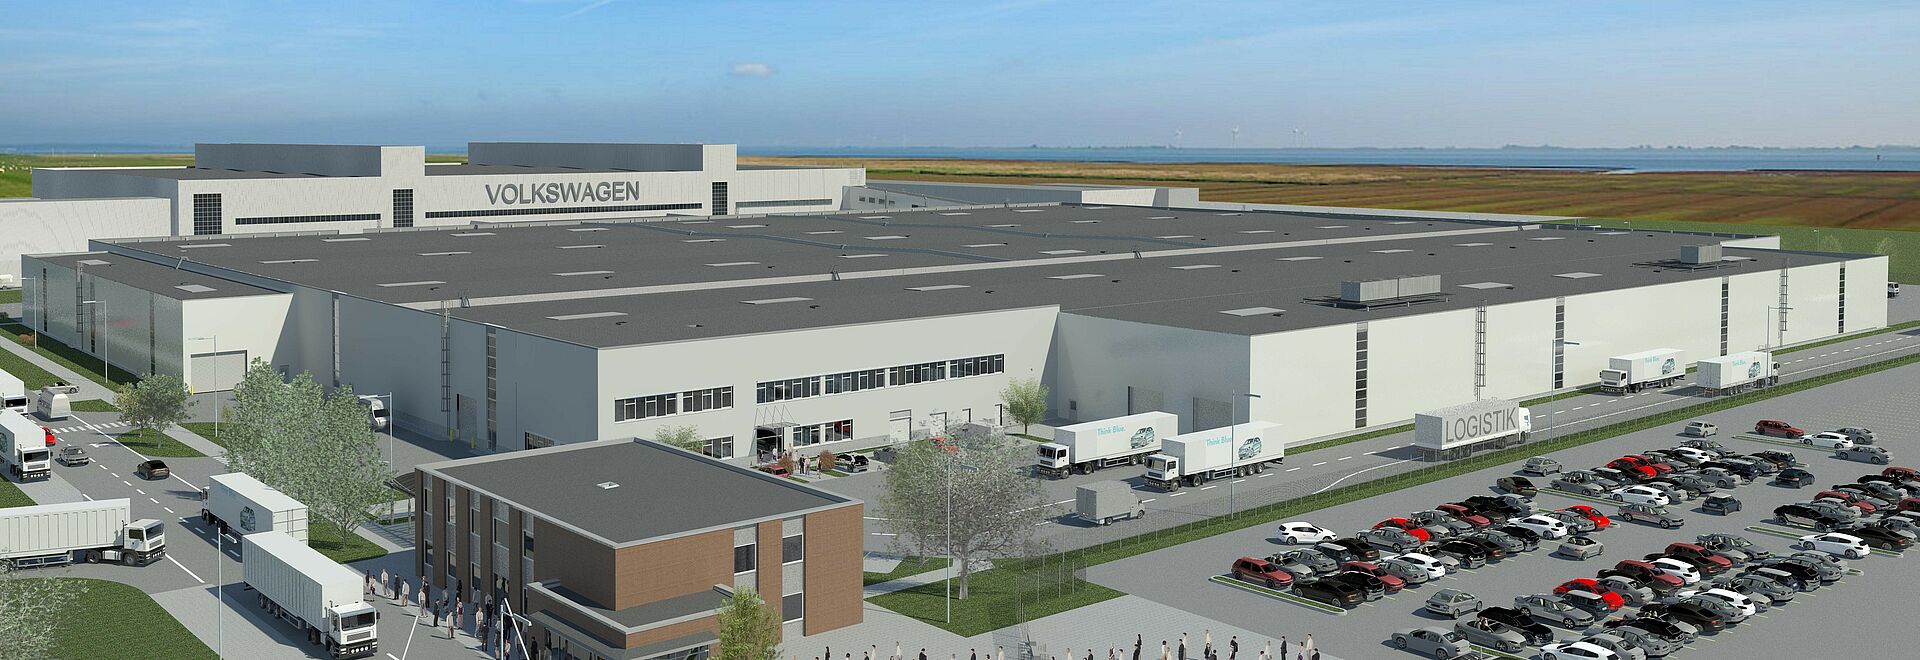 VW Emden: Neubau Logistikzentrum Logistics Optimization Center (LOC) - Halle 9